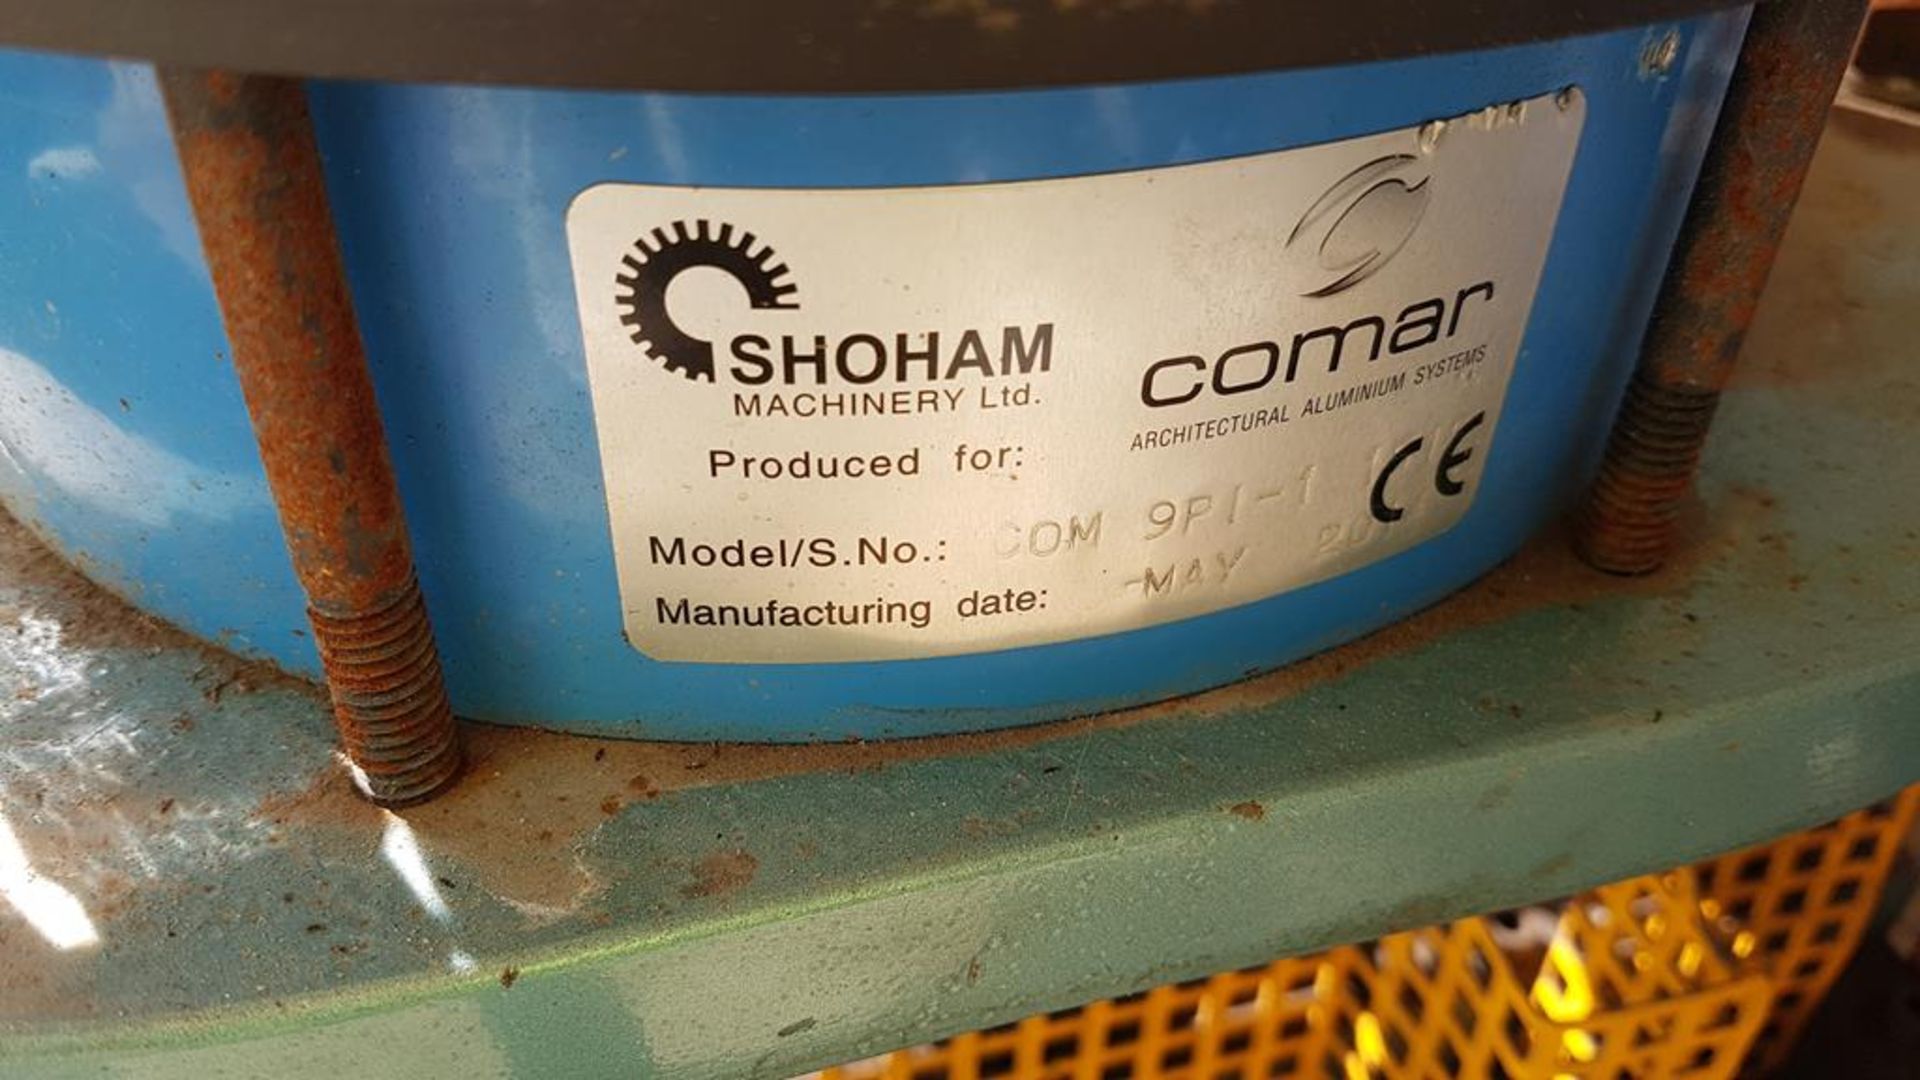 3 x Shoham Comar Hydraulic Pressing Tools. - Image 4 of 4